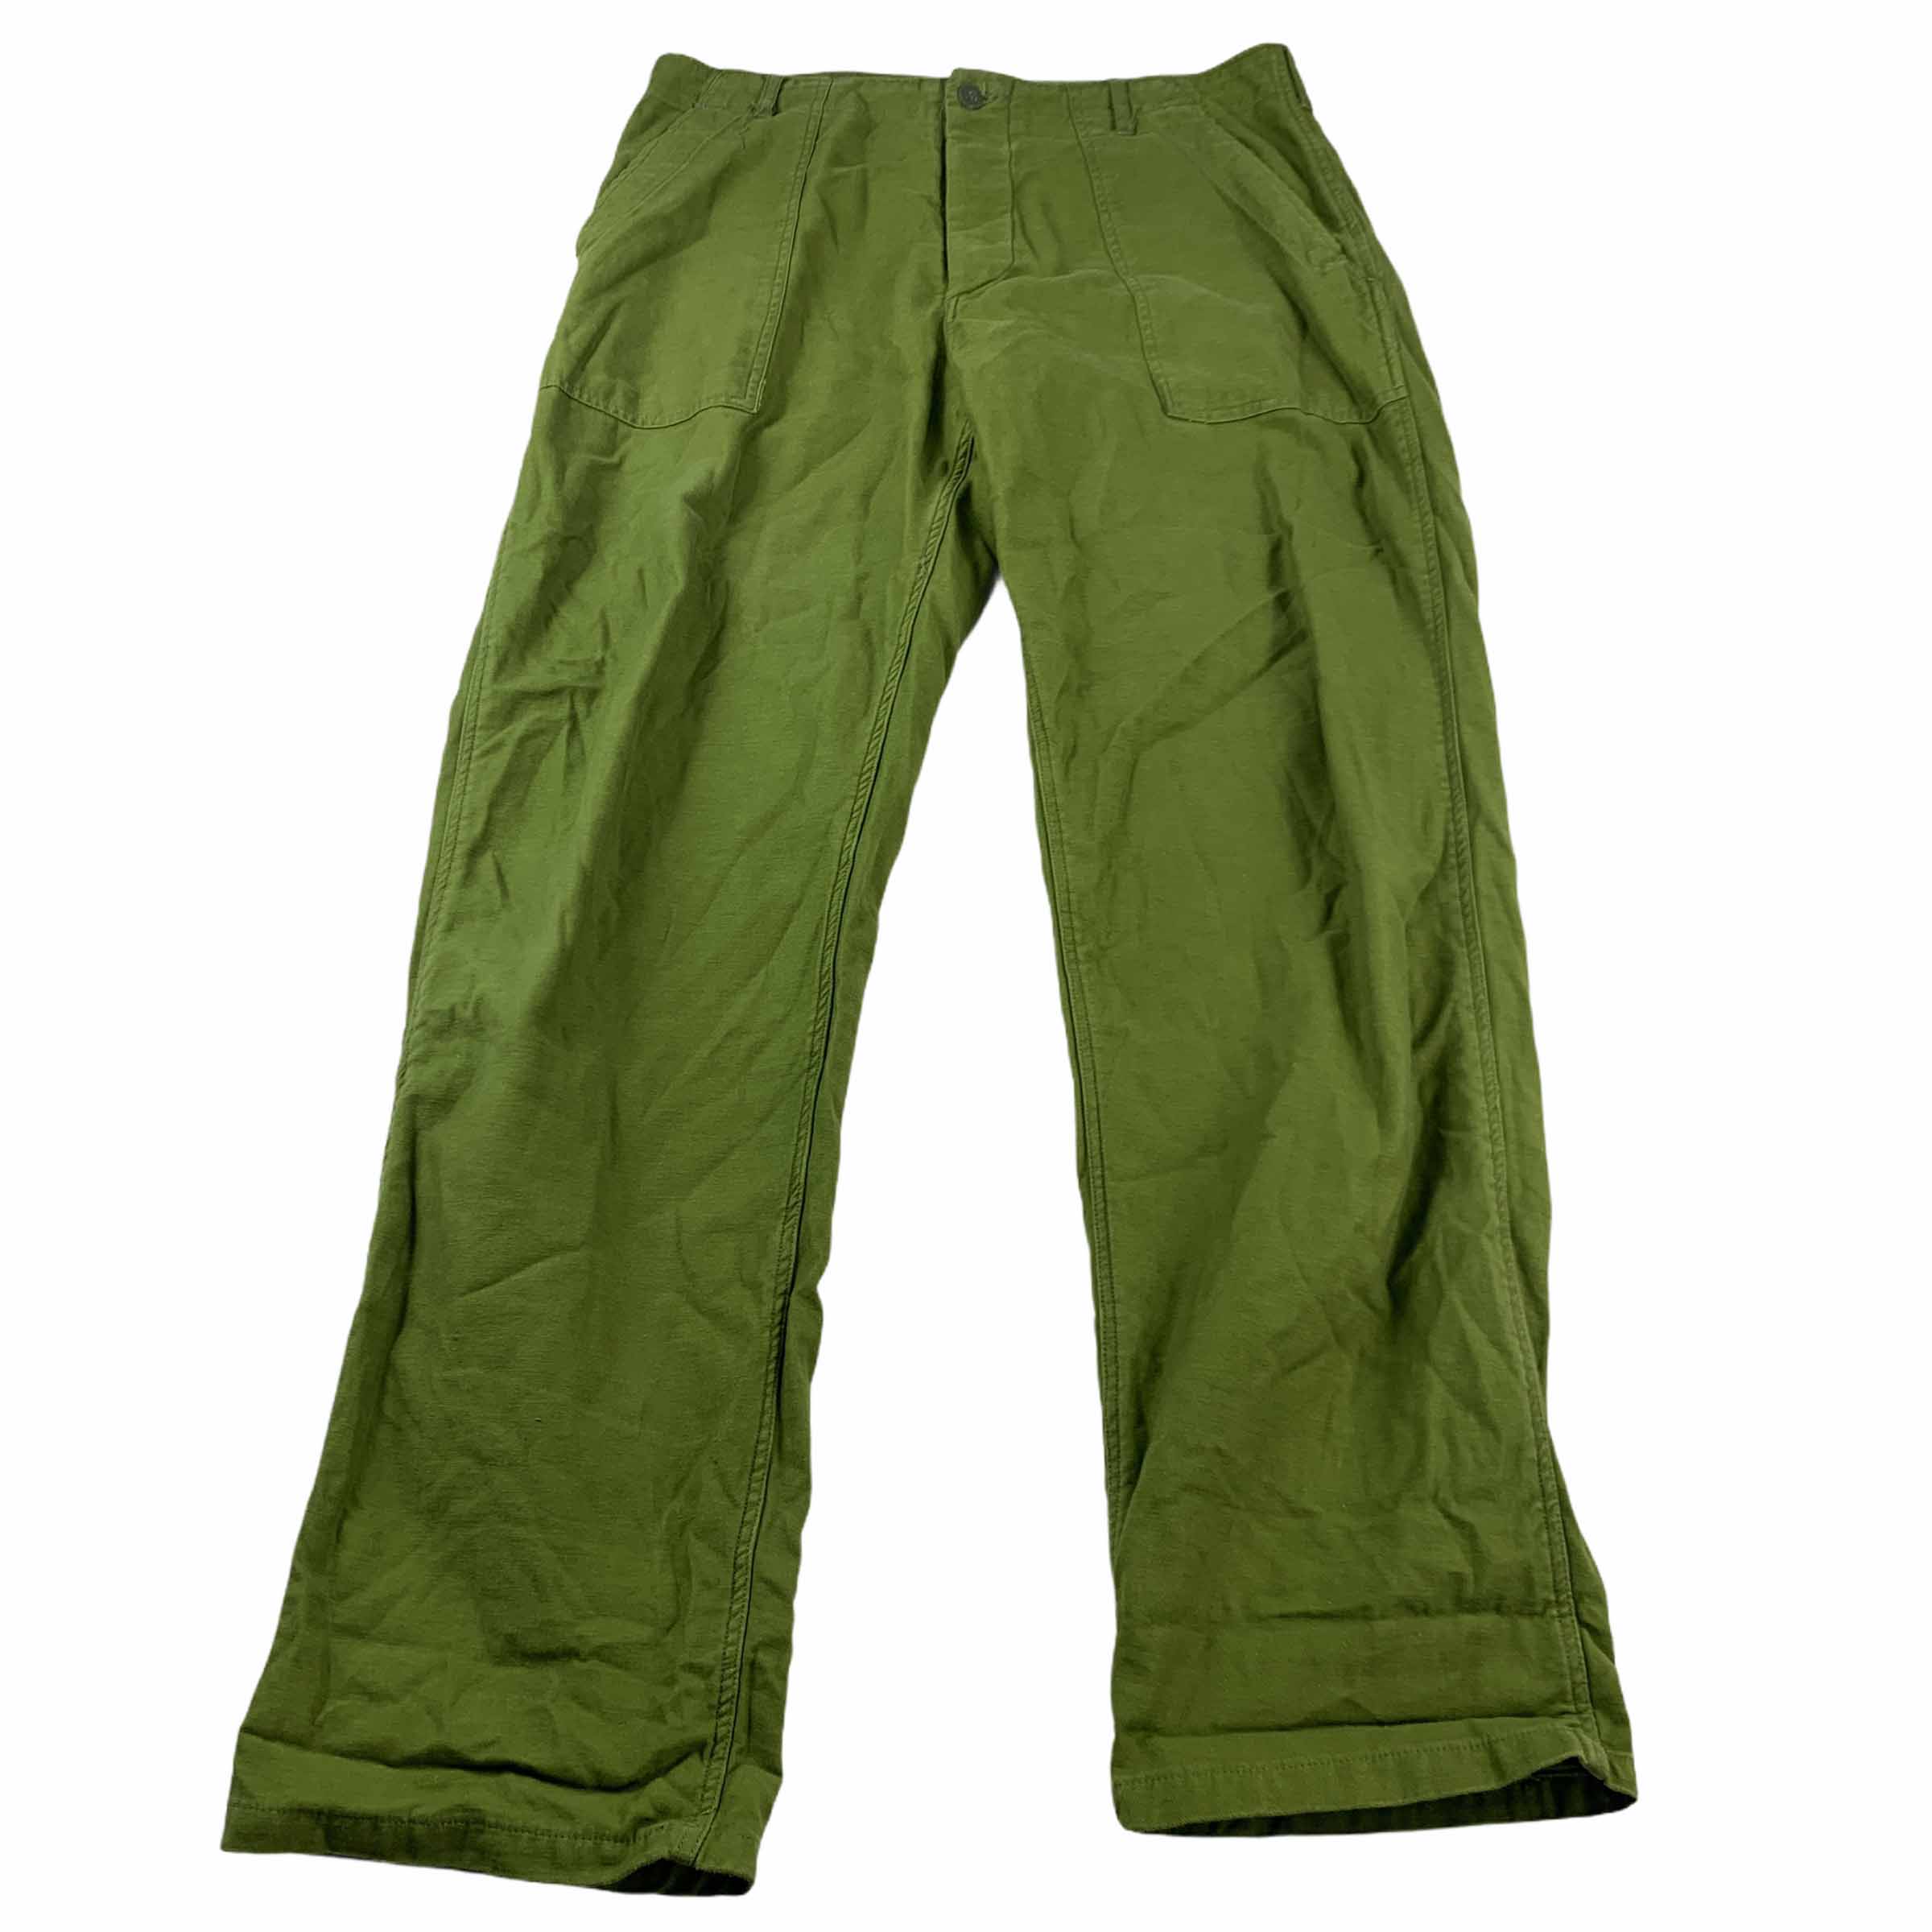 [YMCL] OliveGreen Pants - Size 33/31